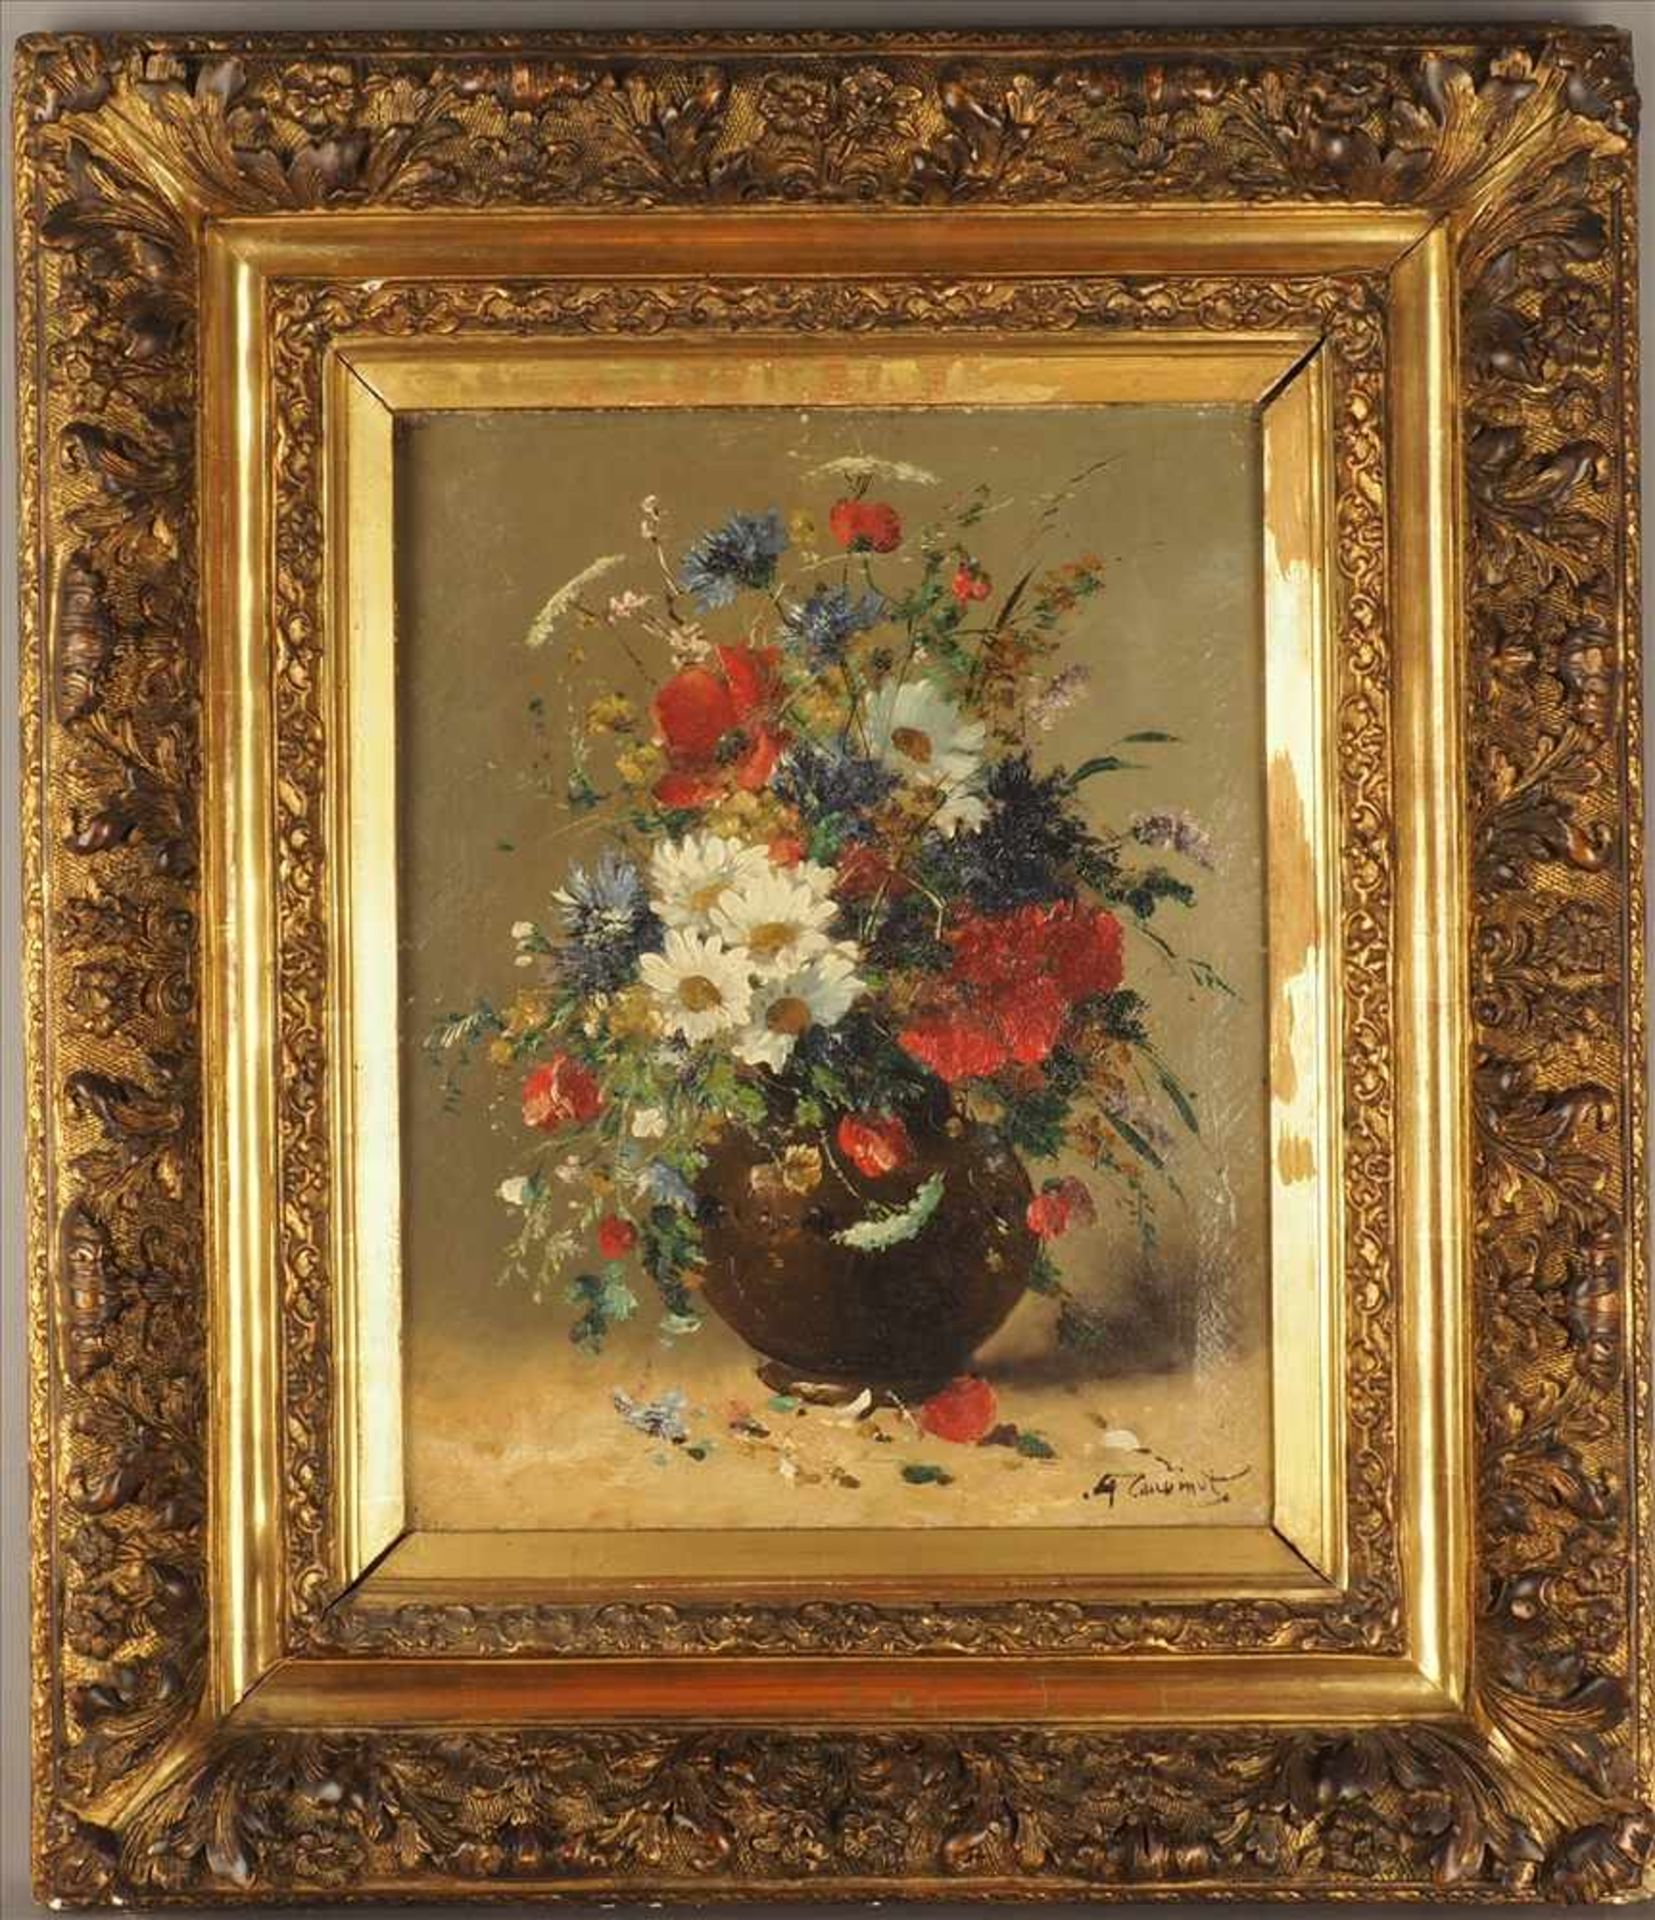 Blumen-StillebenÖl/Lw. um 1900, unleserl. sign. im Prunkrahmen.Maße: H67 x B57cm